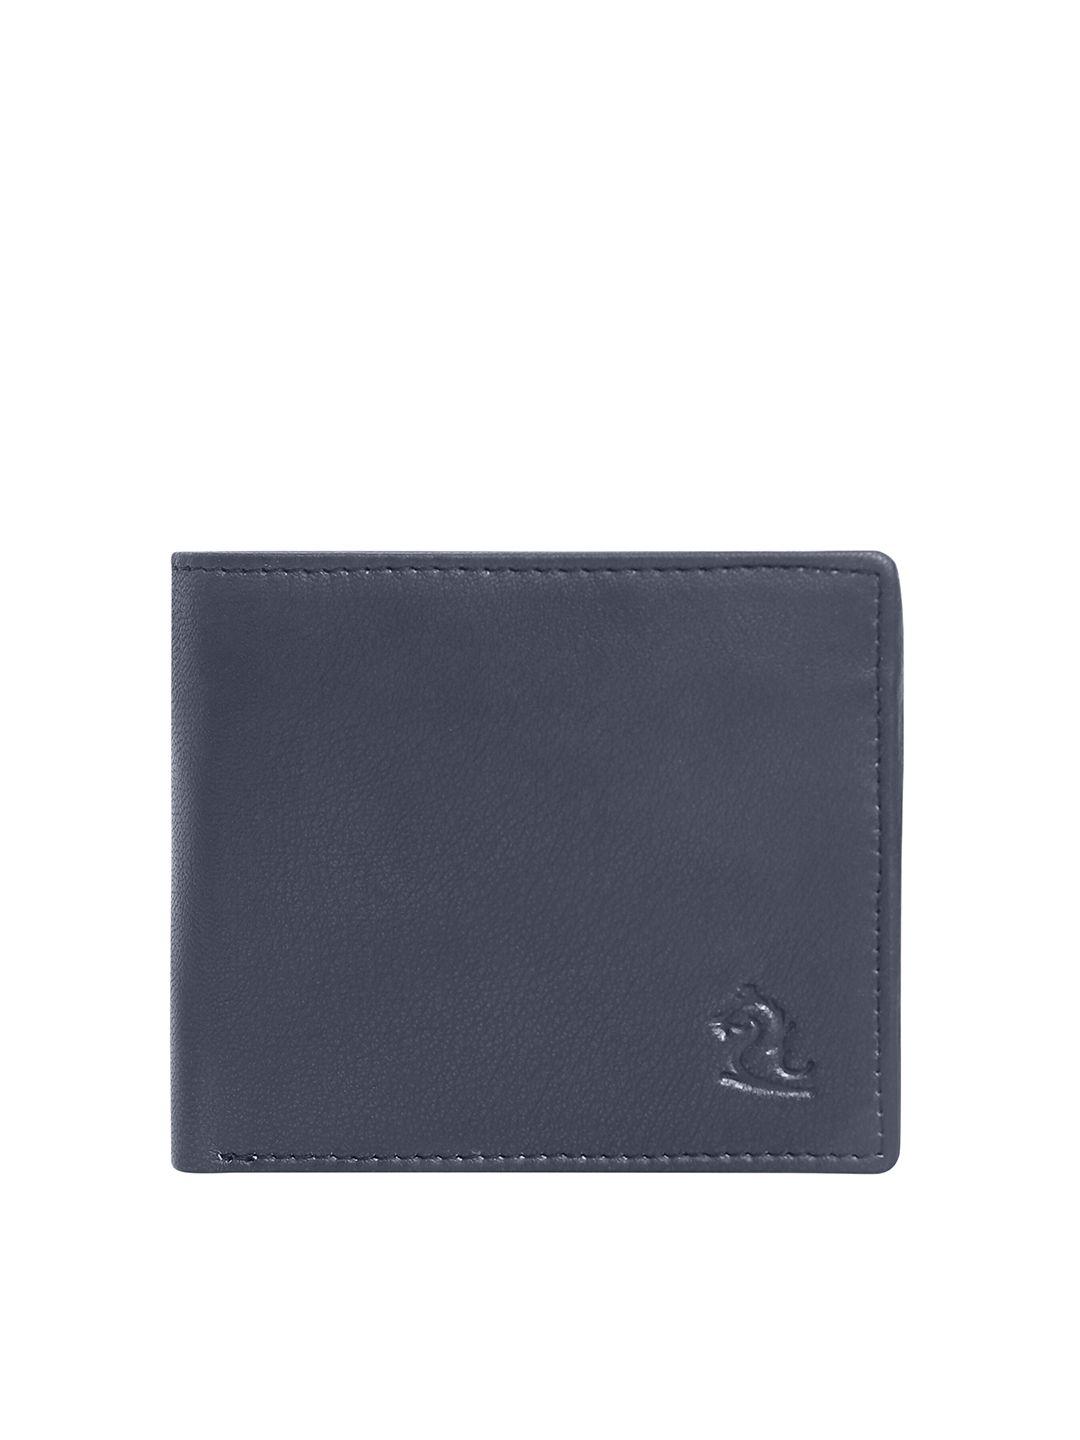 kara men blue textured leather two fold wallet